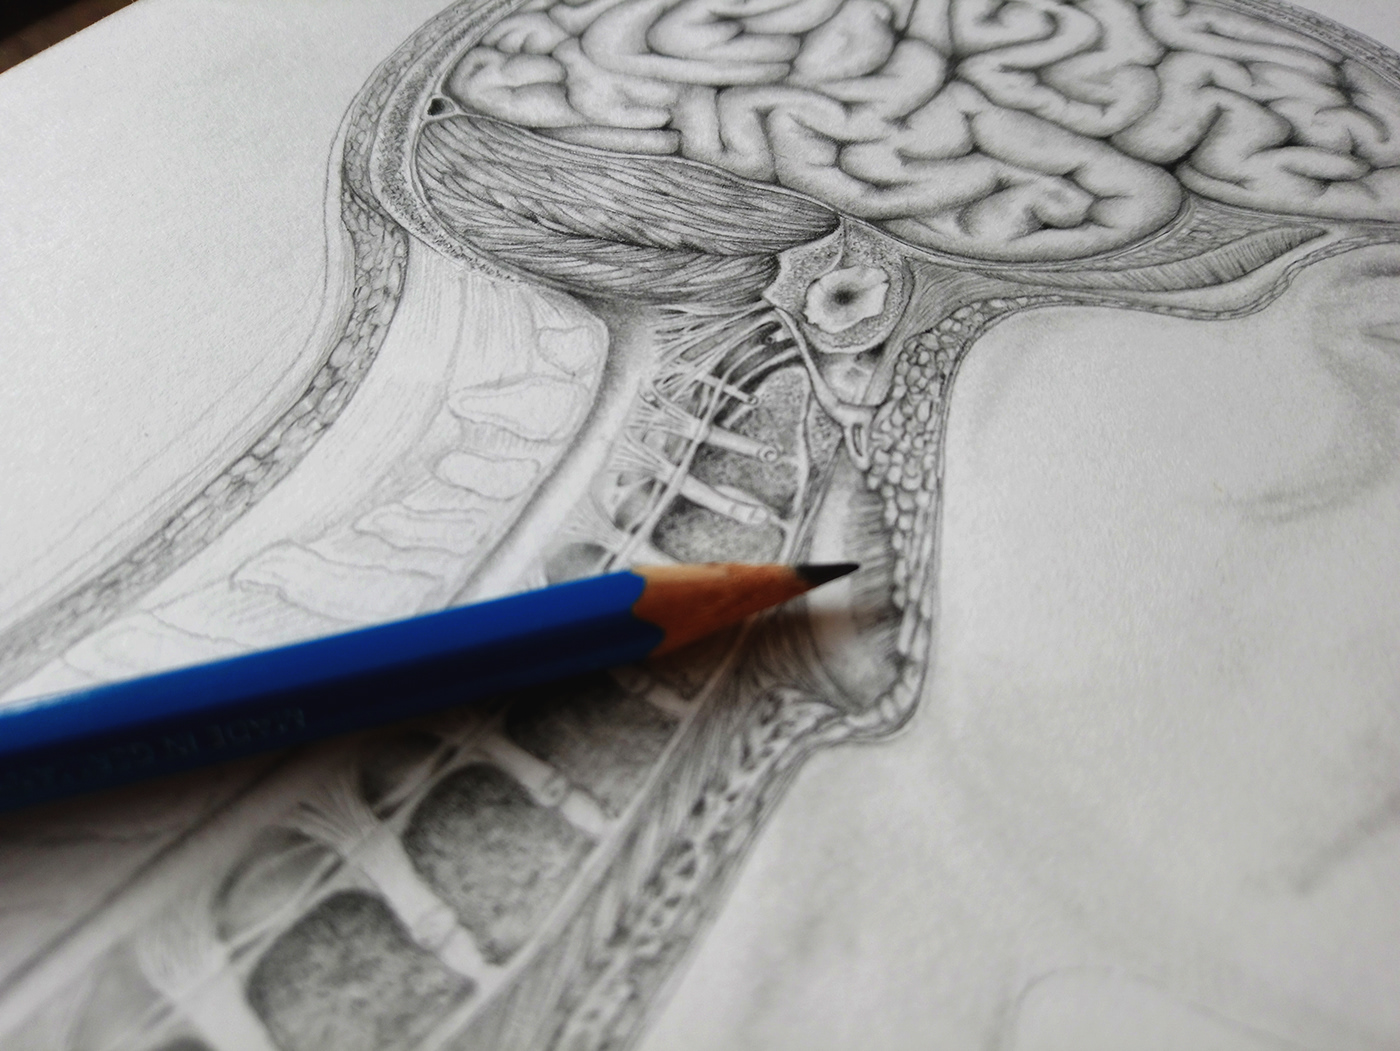 anatomical drawing anatomy brain dibujo anatónomico encephalon graphite illusration ilustración científica pencil scientific illustration